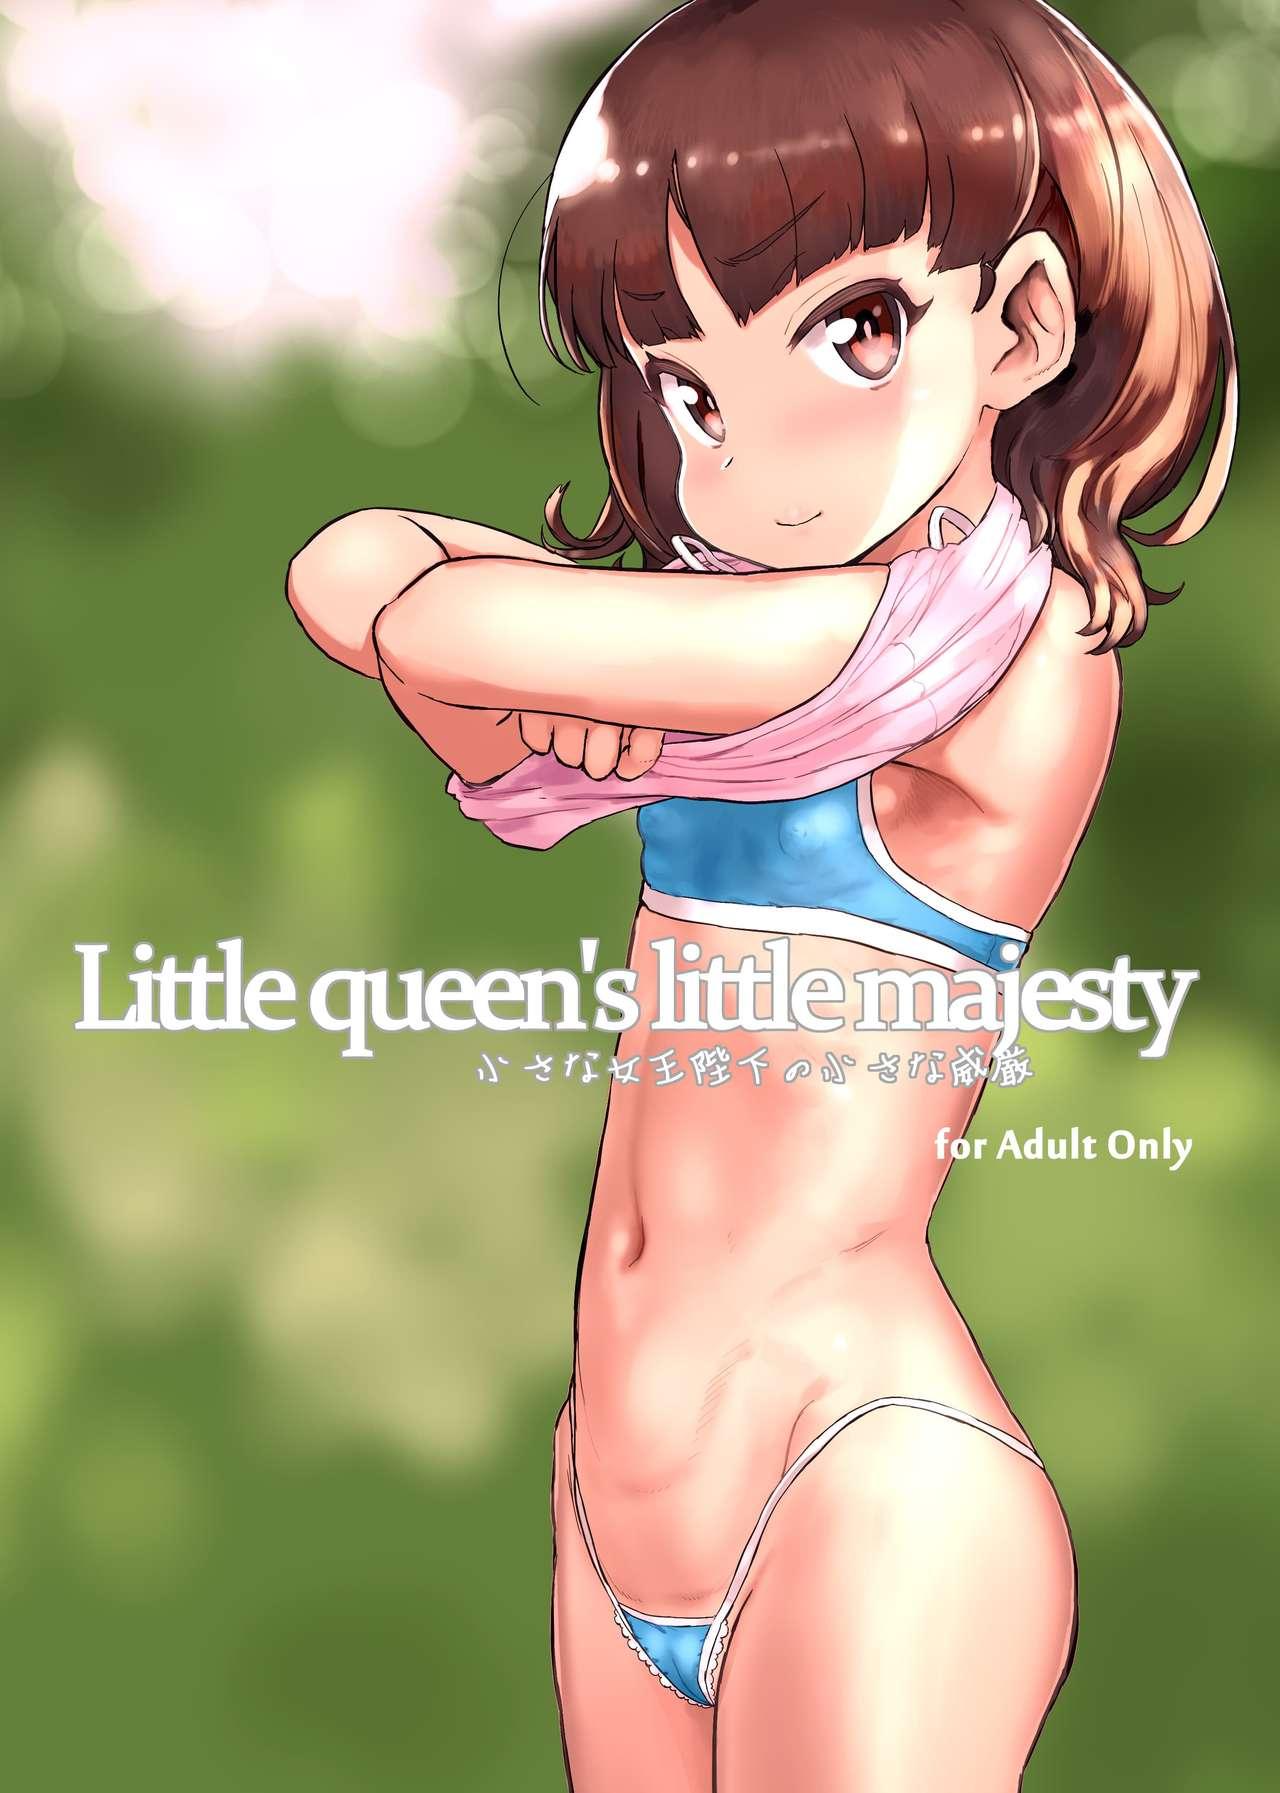 Chiisana Joou Heika no Chiisana Igen - Little queen's little majesty 0